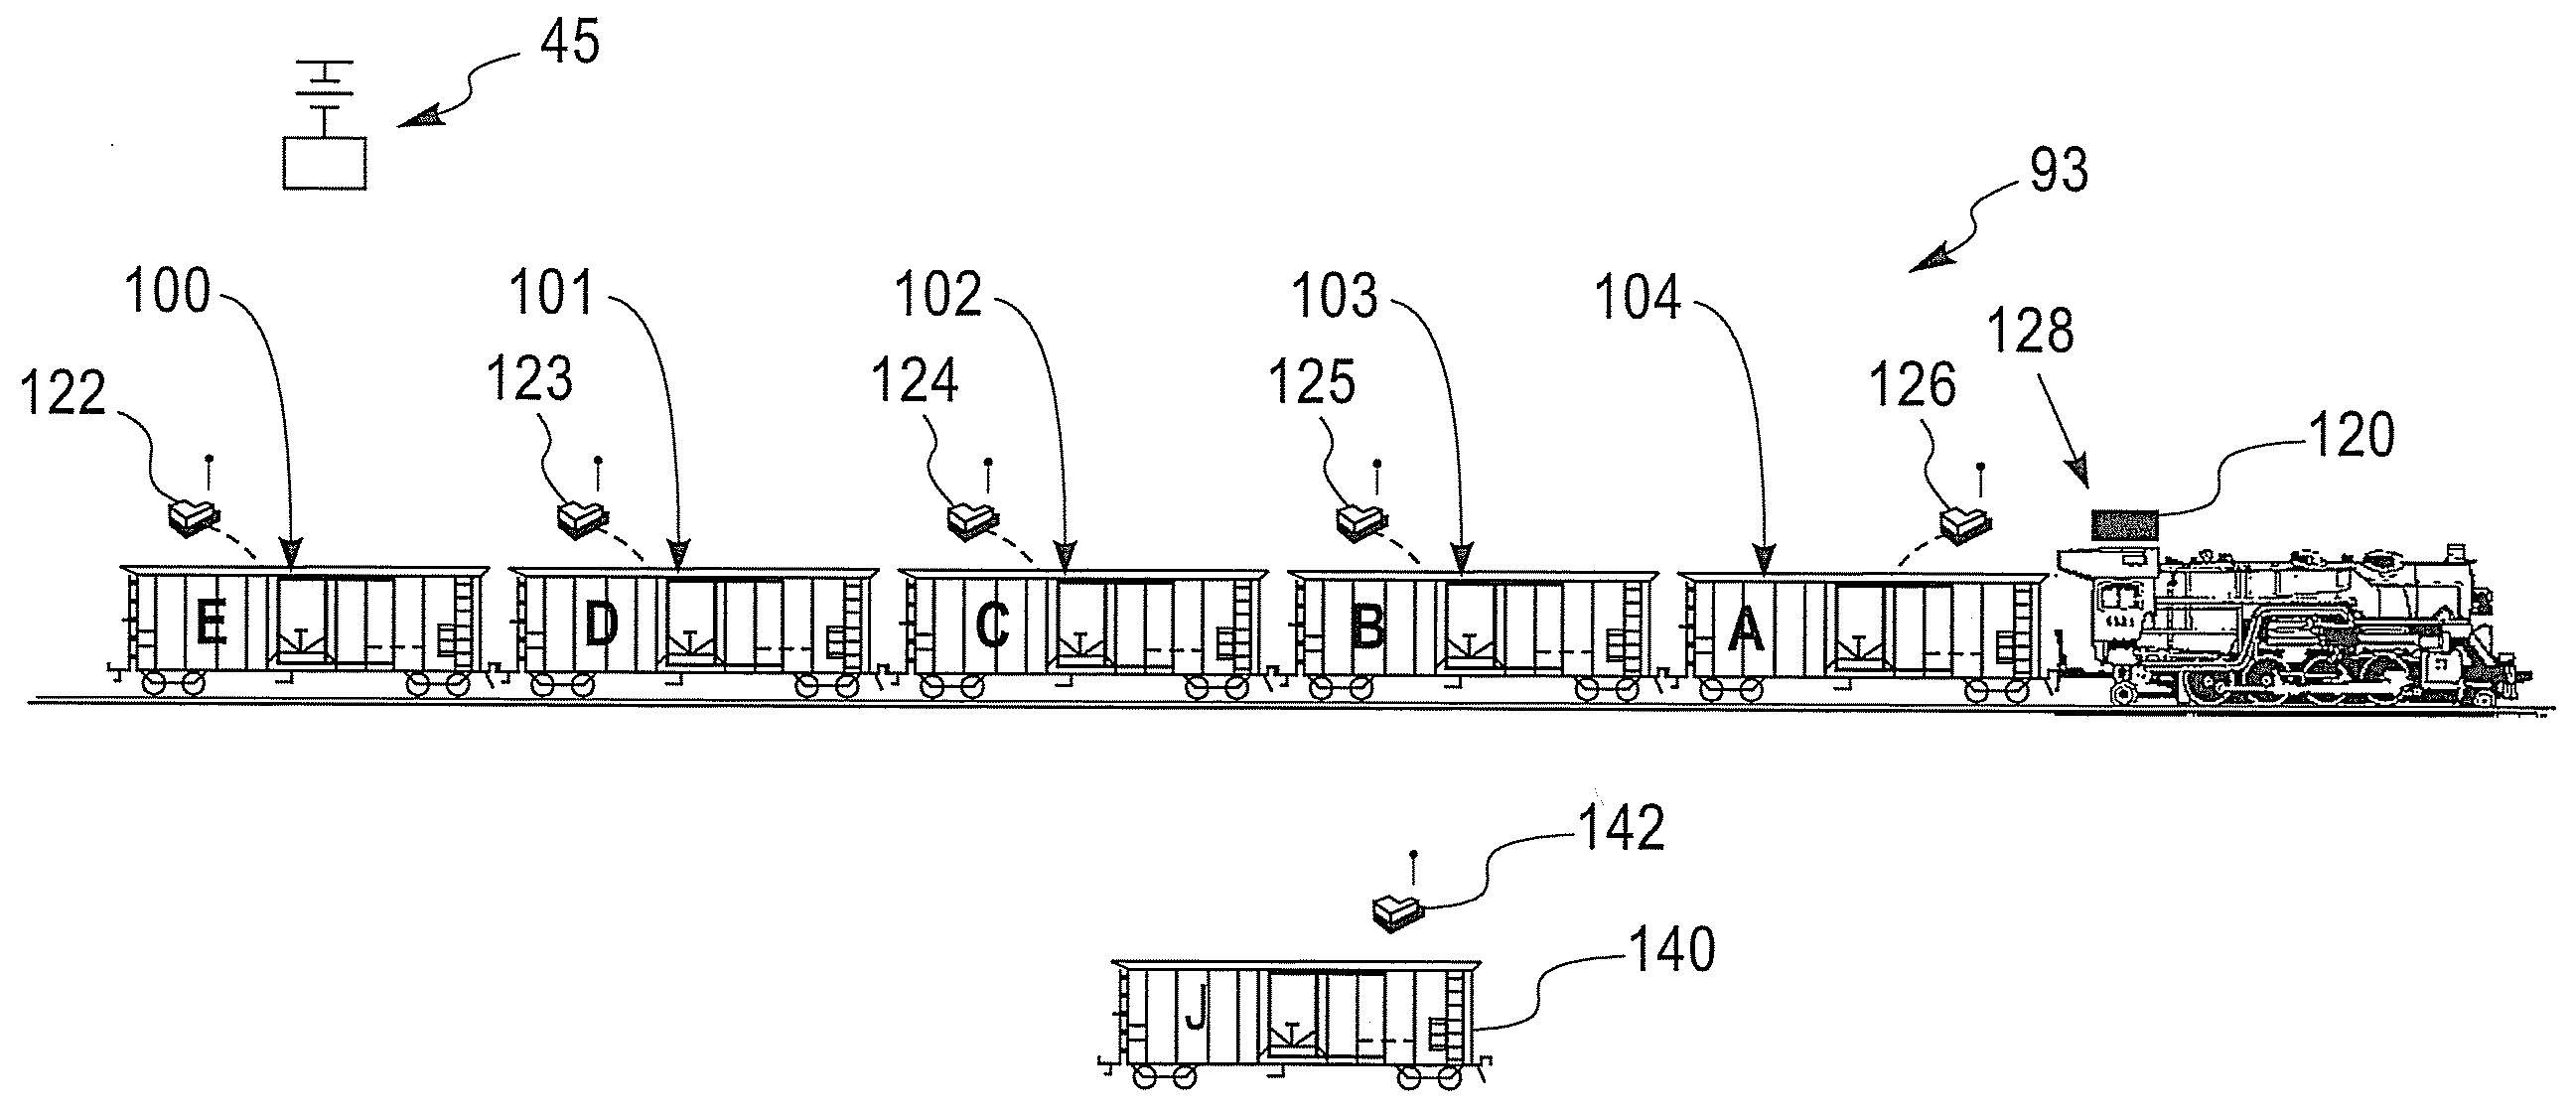 Rail Car Sensor Network